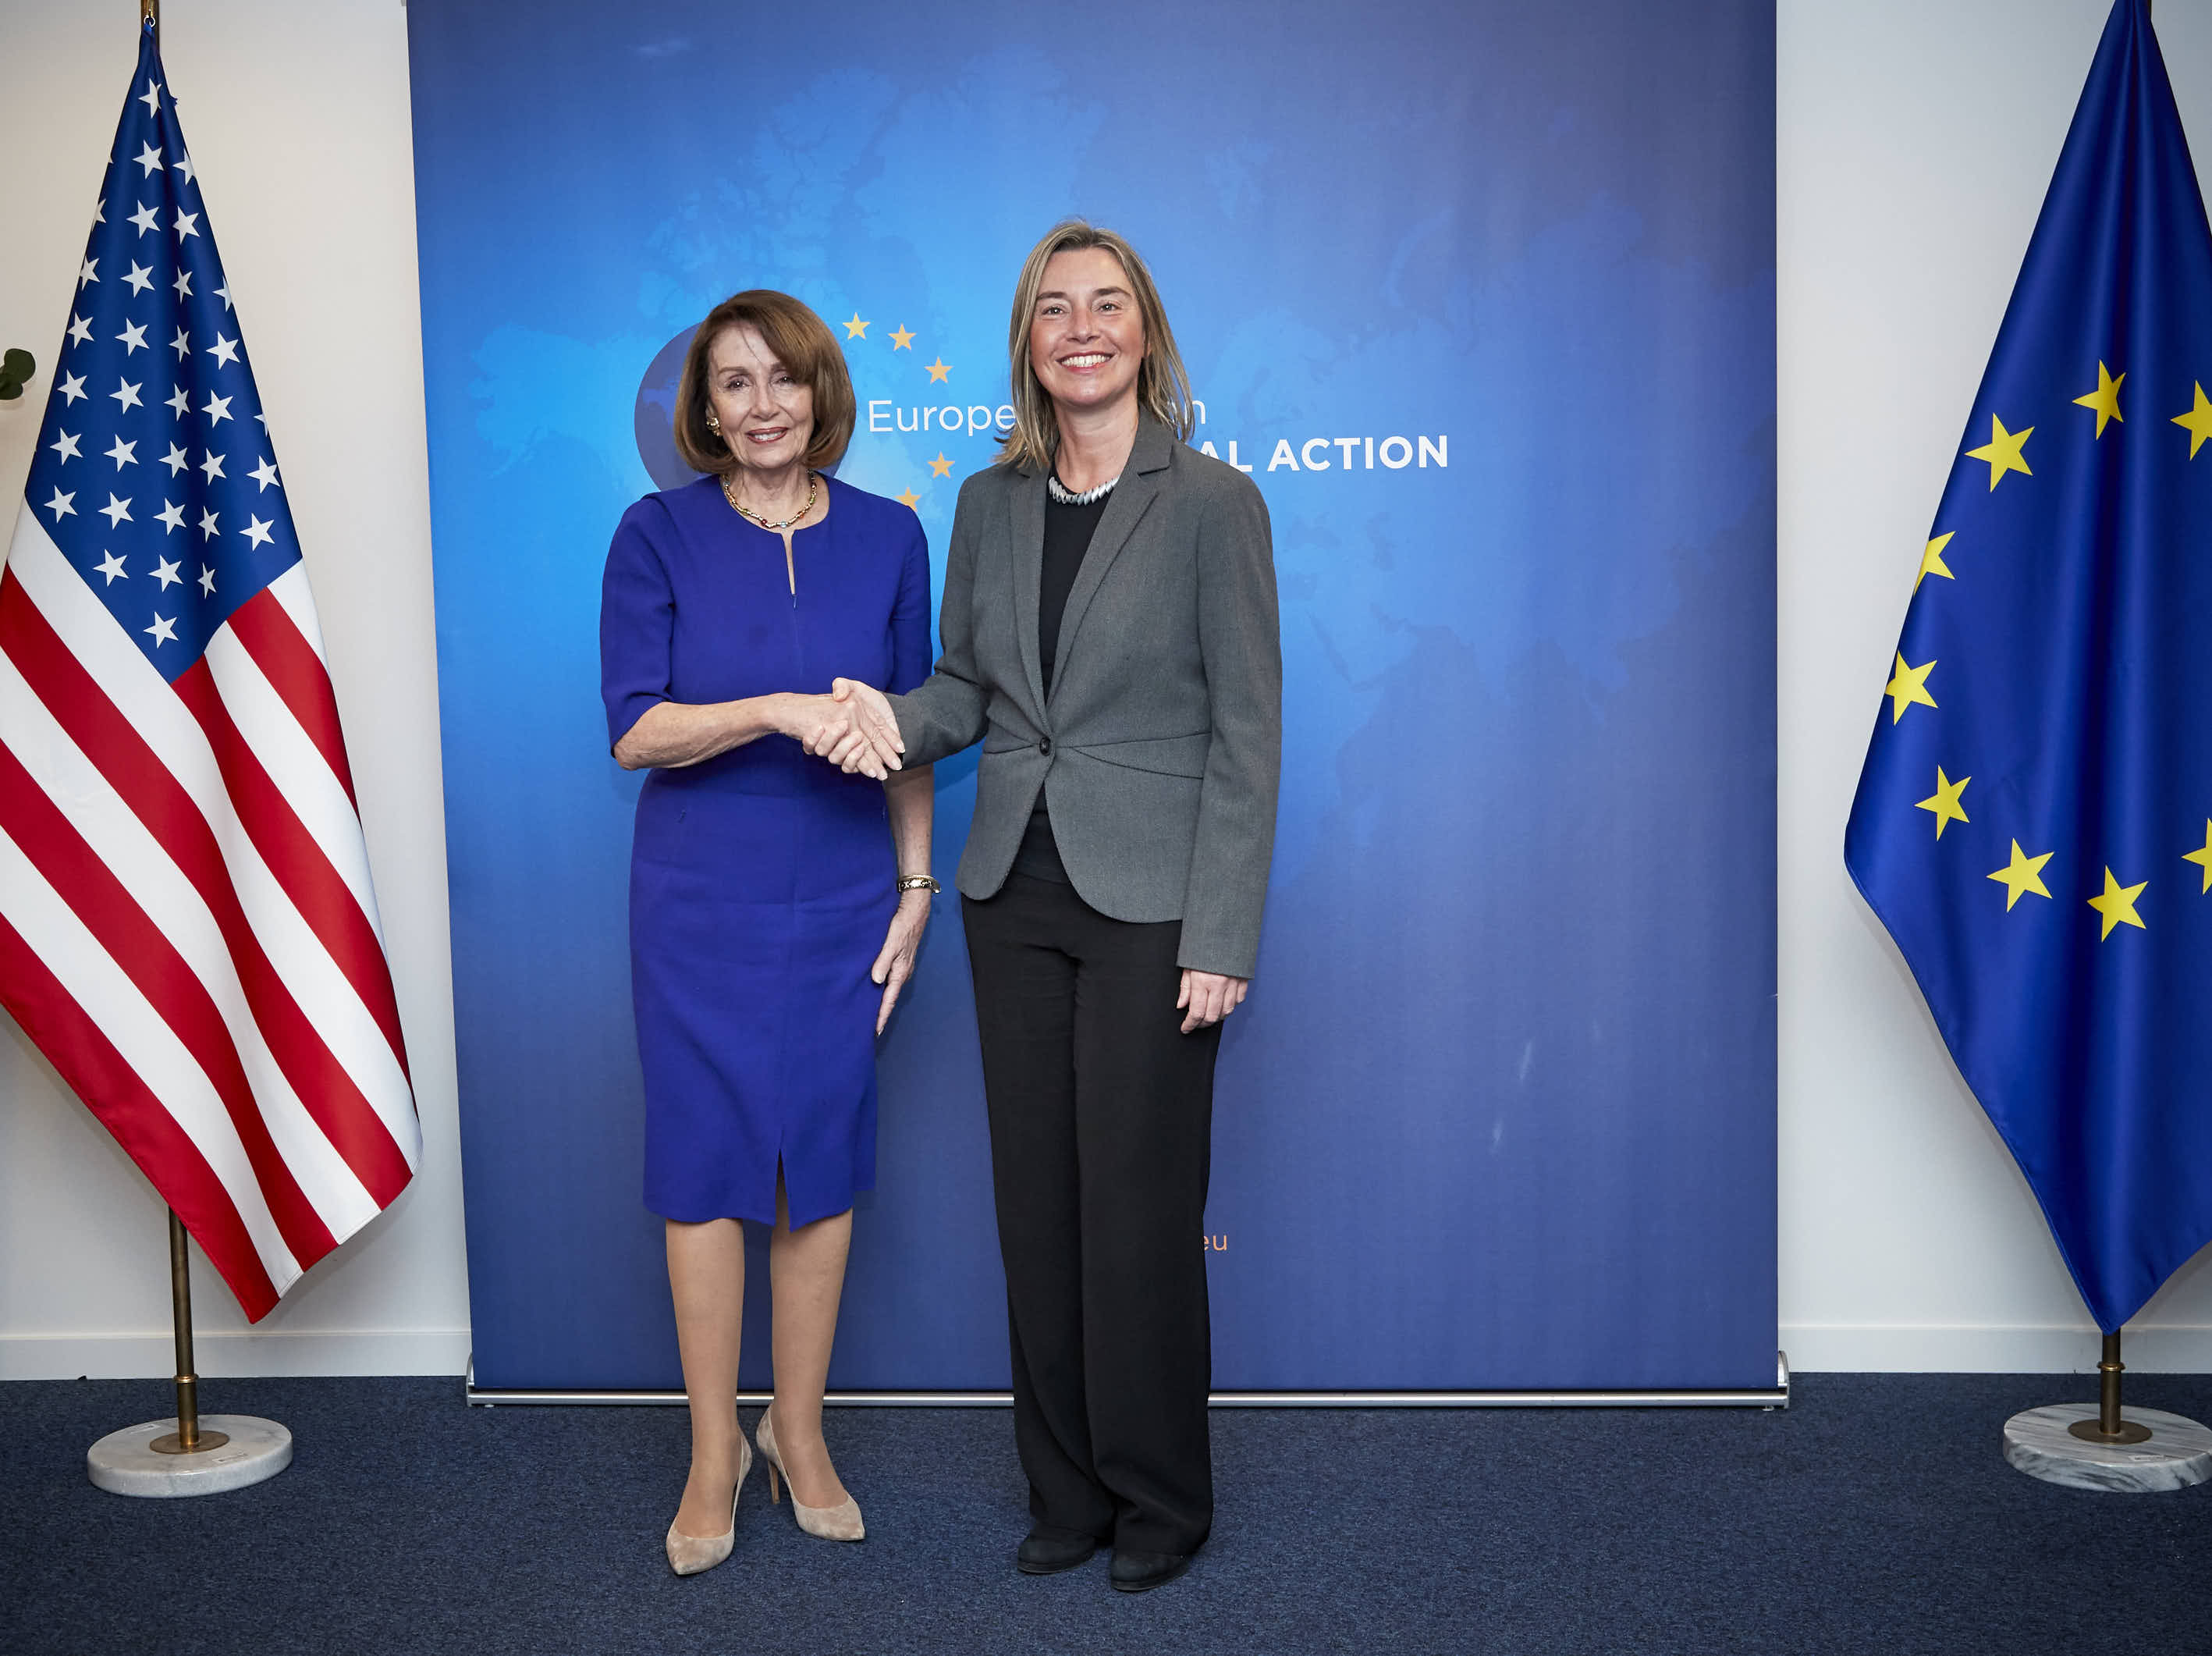 Nancy Pelosi, US Speaker of the House of Representatives with EU High Representative Federica Mogherini